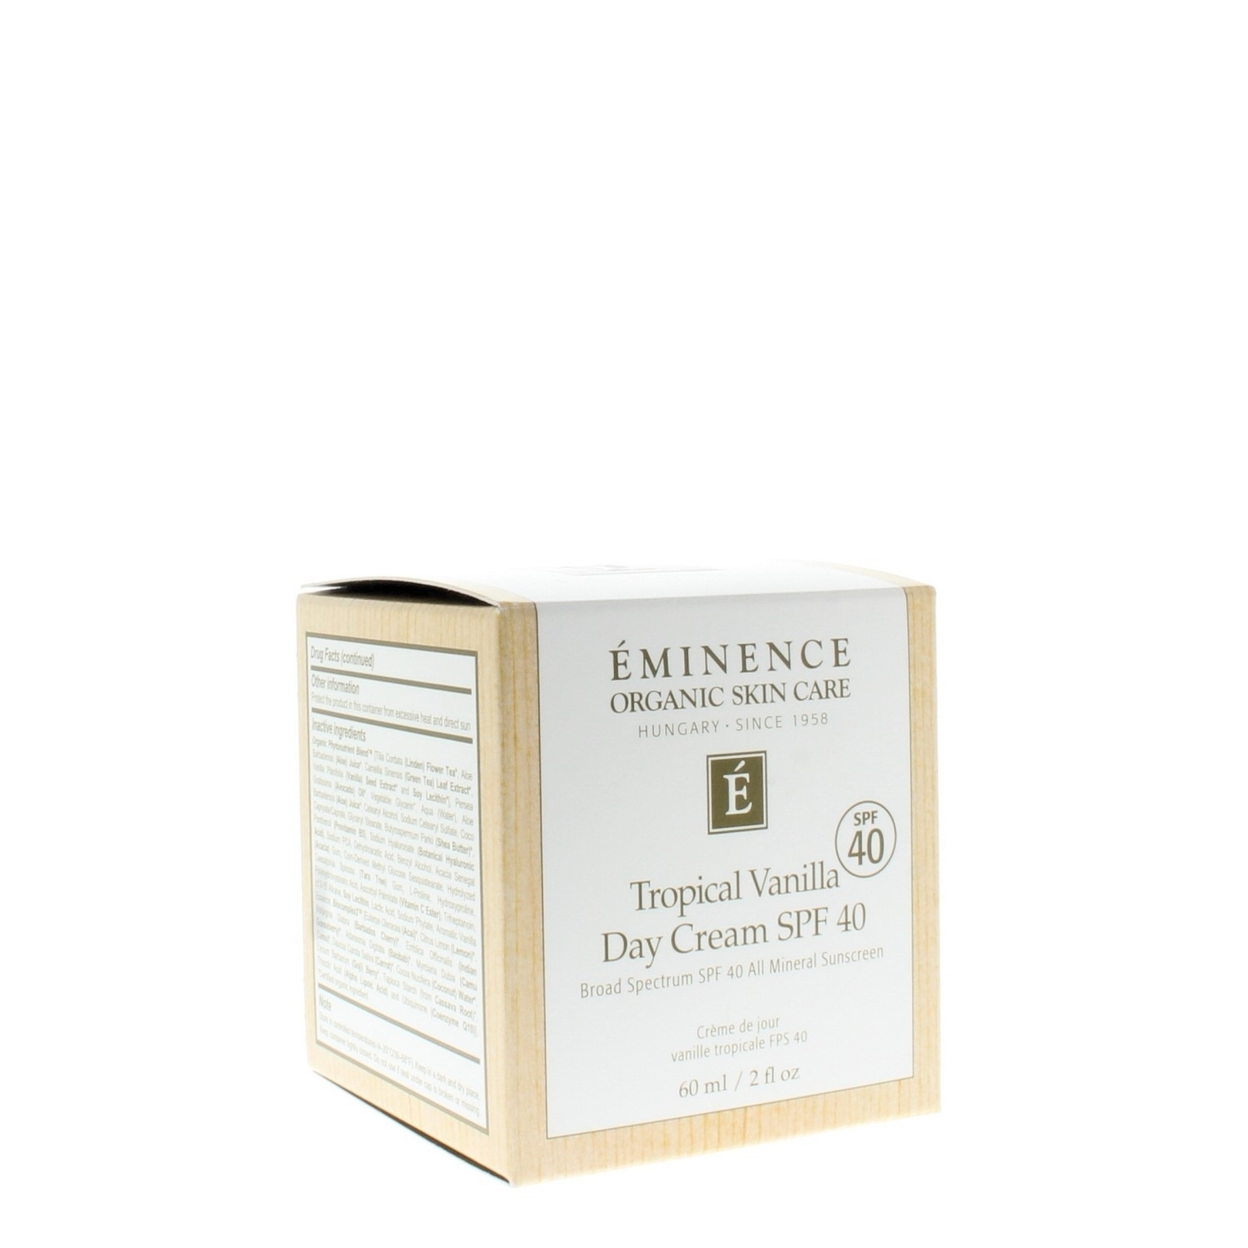 Eminence Tropical Vanilla Day Cream SPF 40 60ml/2oz